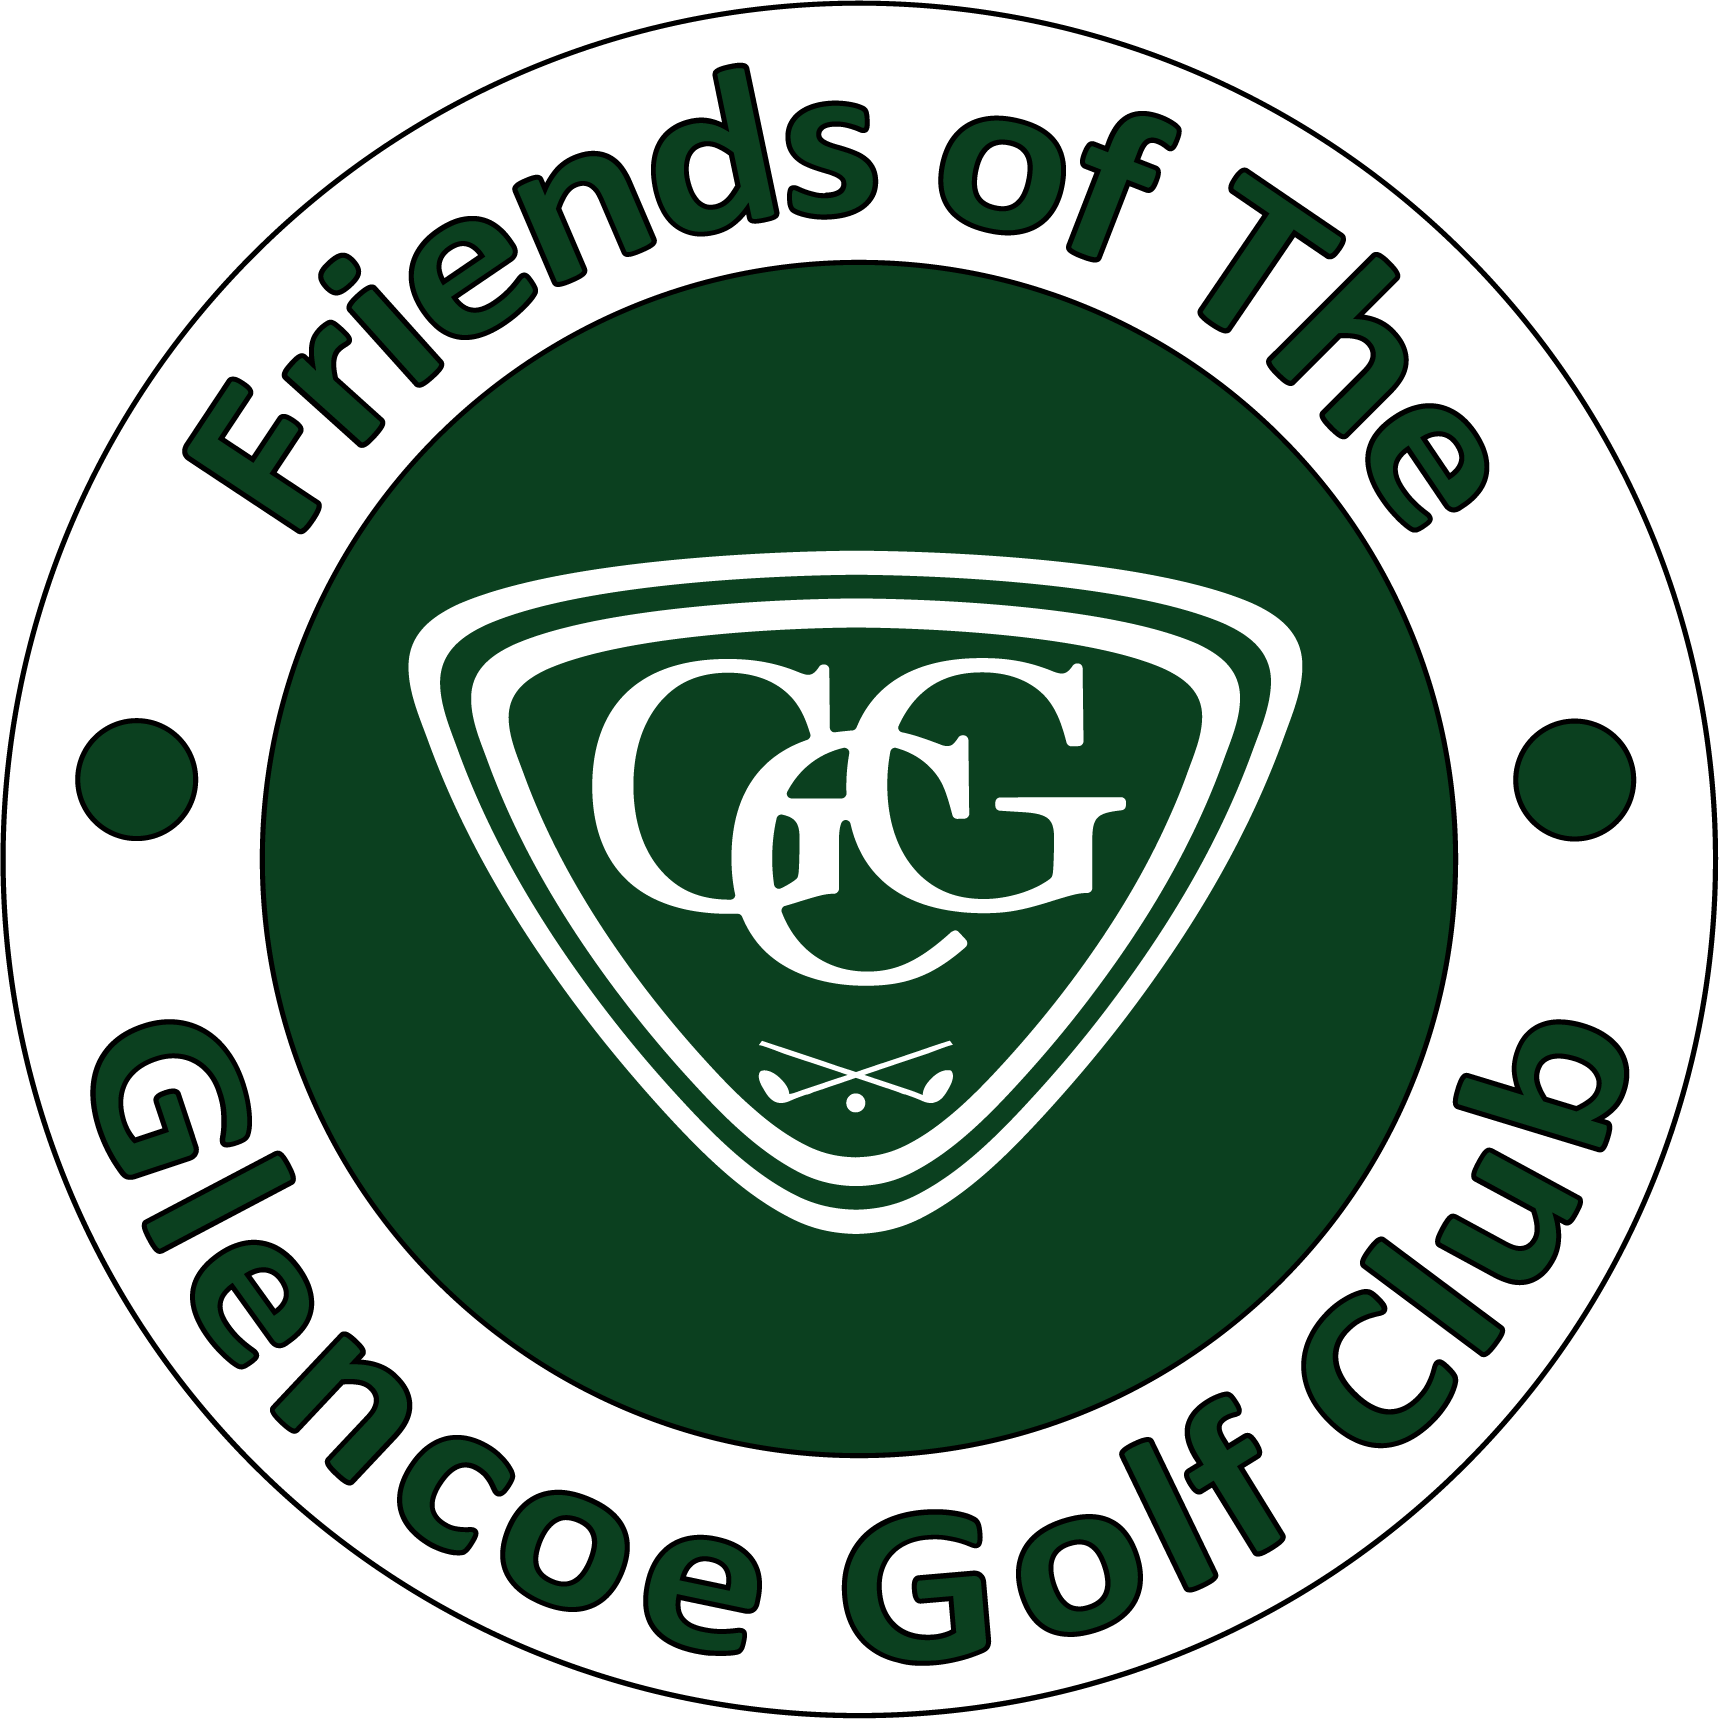 Friends of the Glencoe Golf Club